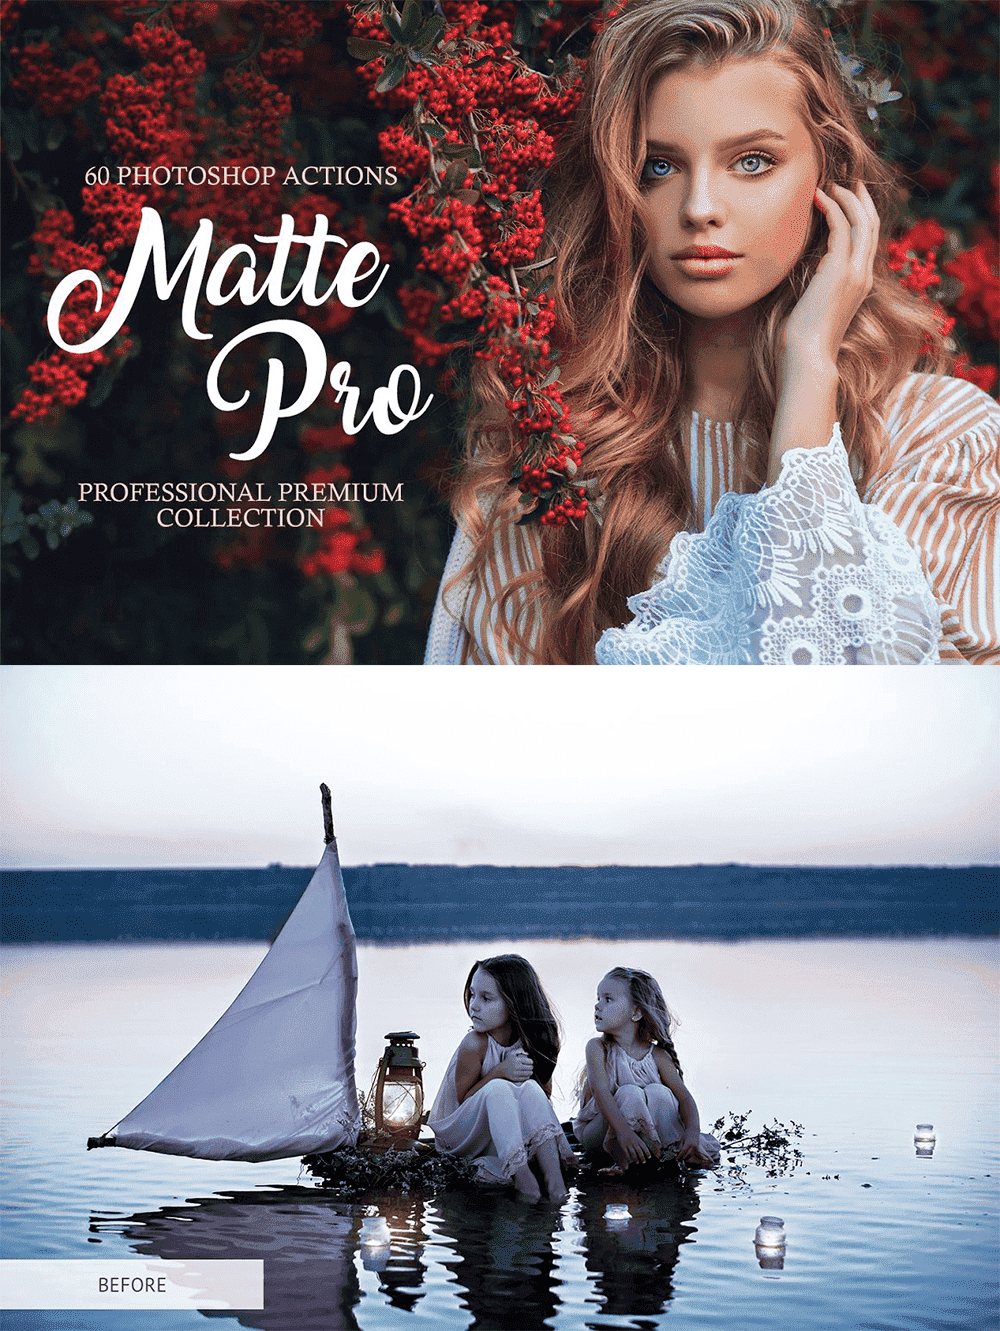 Matte pro photoshop actions, picture for pinterest 1000x1331.